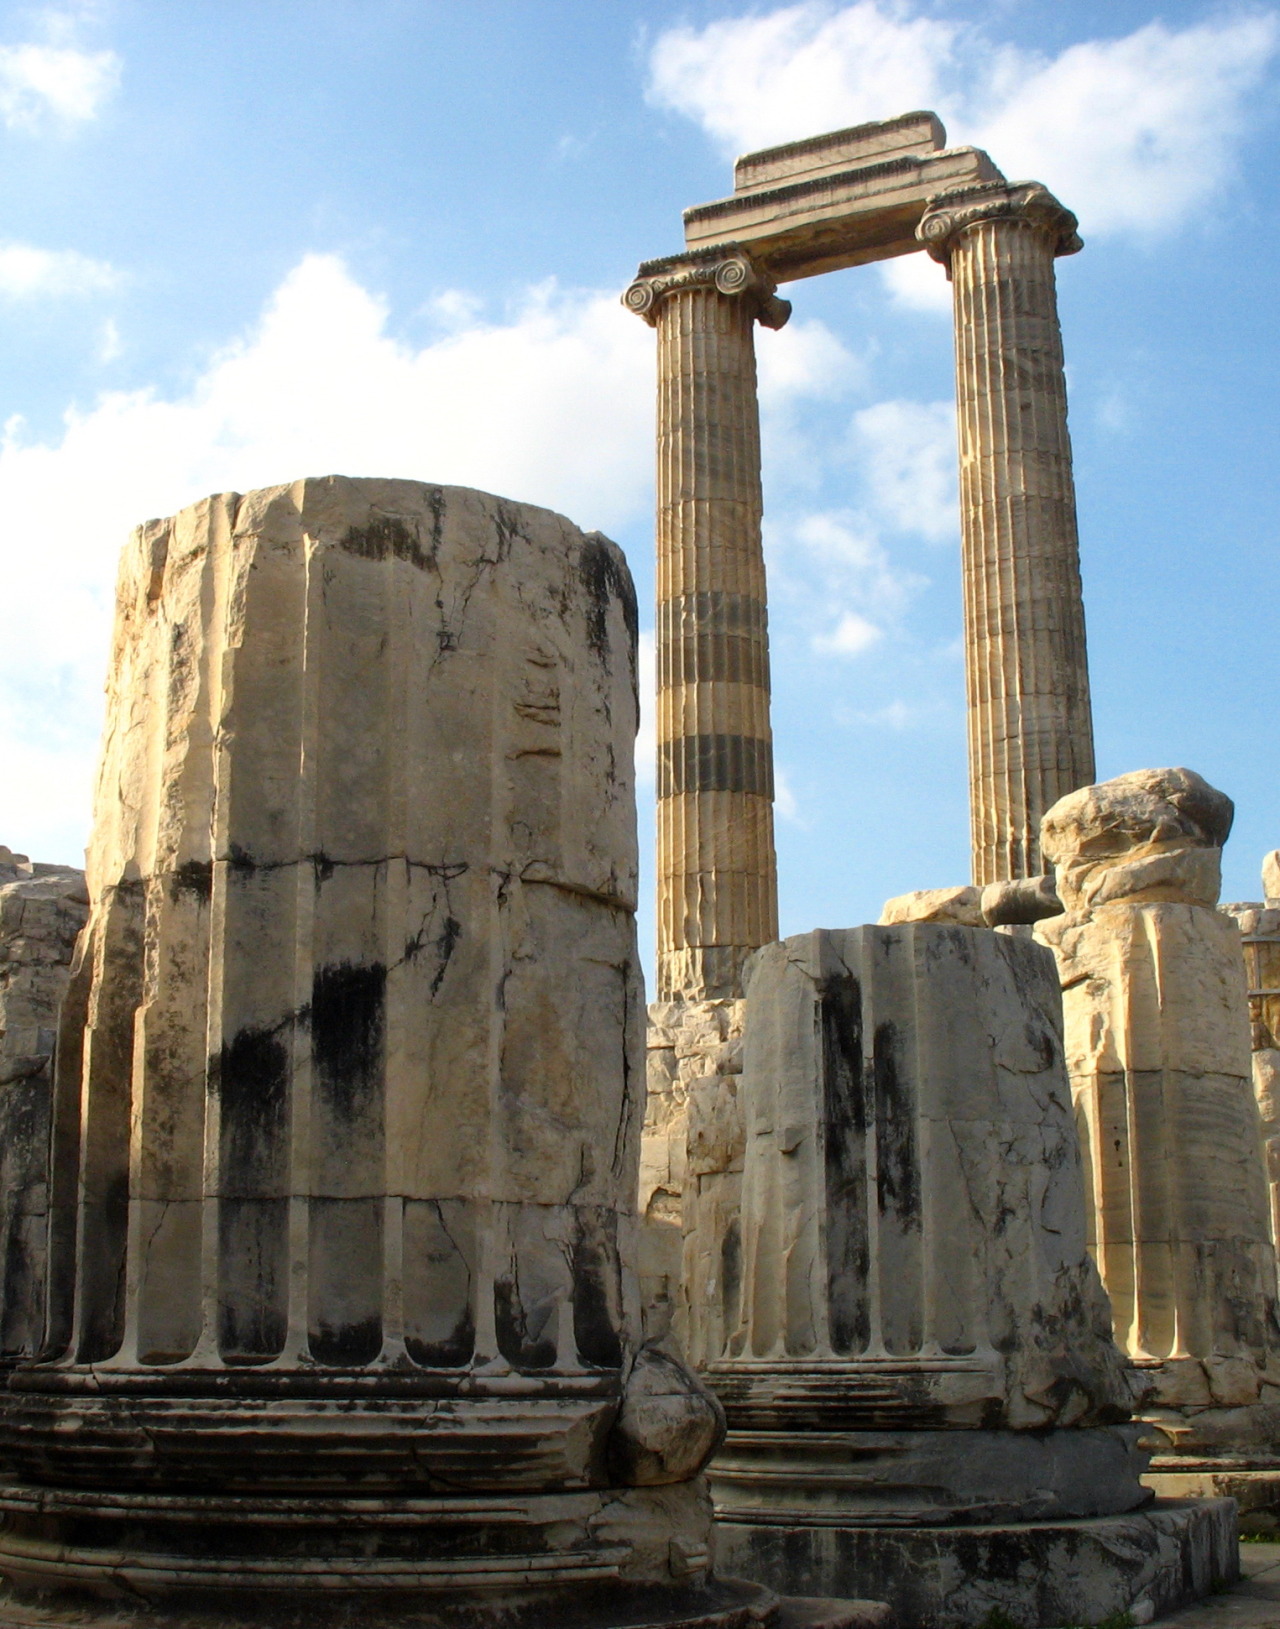 Temple of Apollo in the ancient roman city of Didyma, Turkey